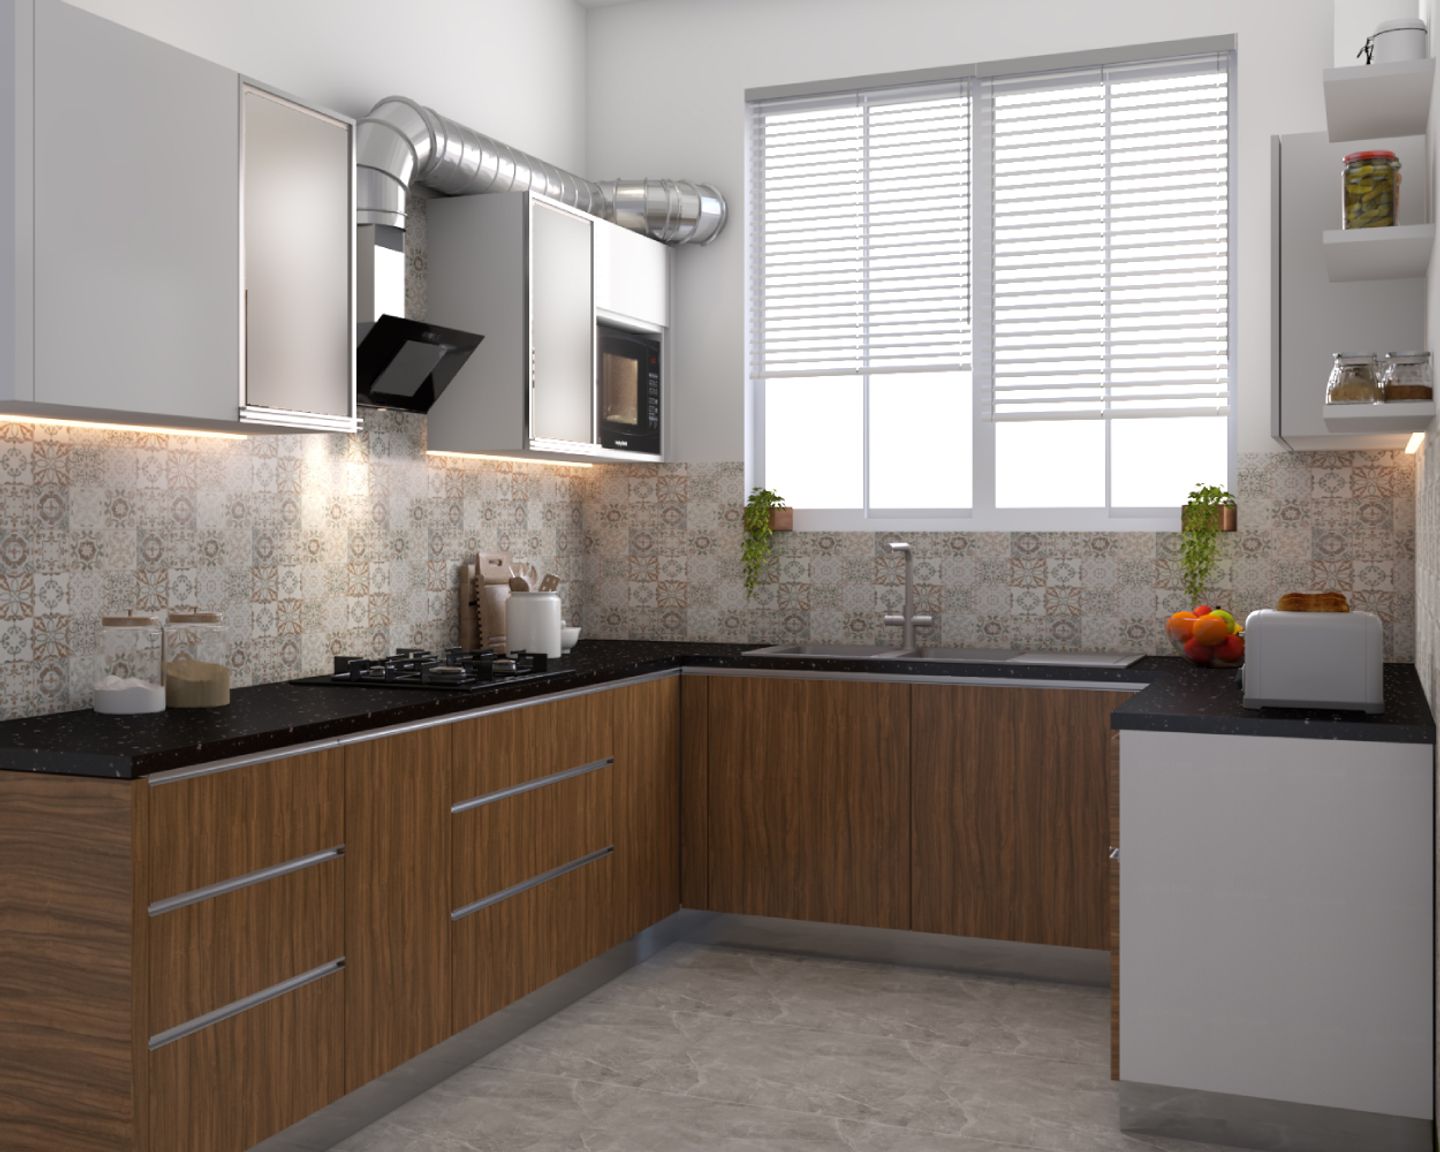 U-Shaped White And Dark Brown Modular Kitchen Design With Moroccan Backsplash And Black Countertop - Livspace